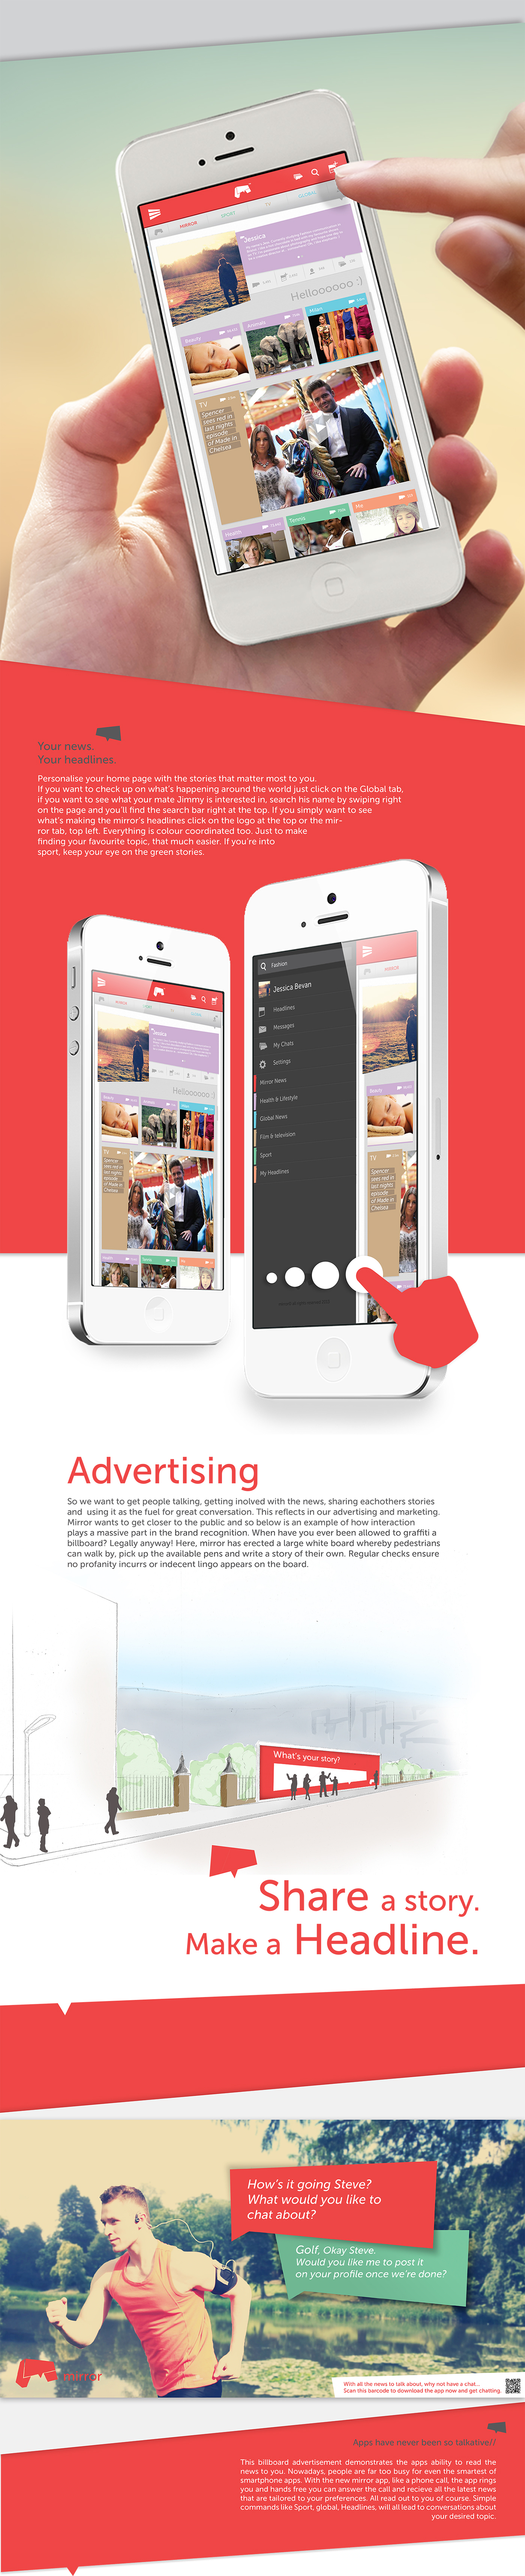 newspaper app mirror colour scheme iphone5 Layout user Interface logo presentation logos Web design InDesign